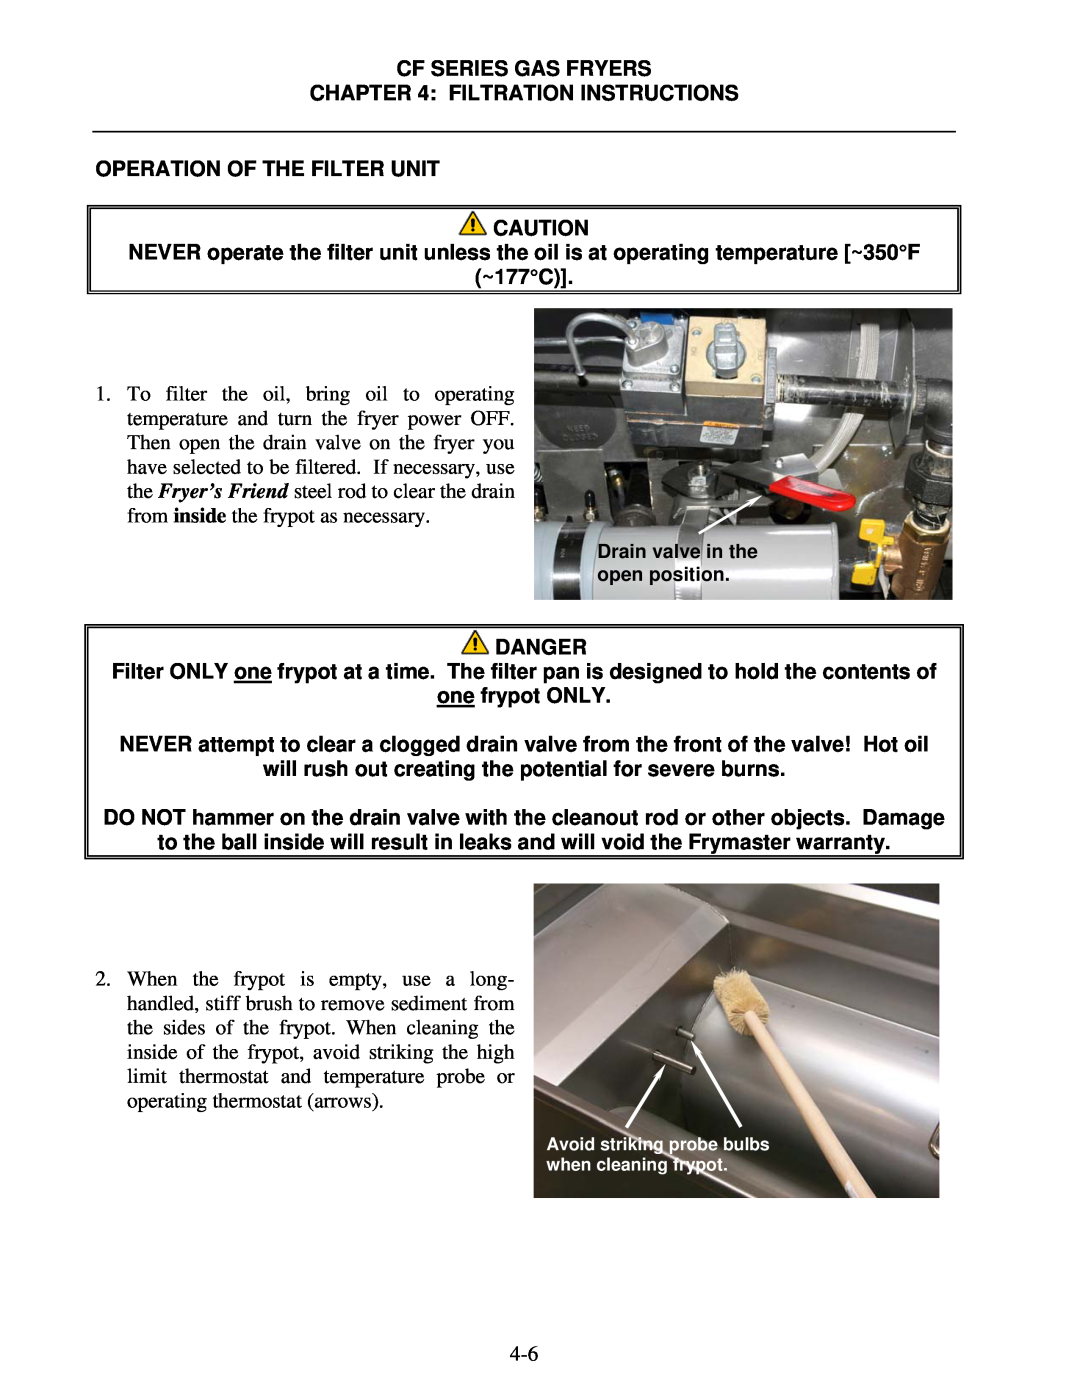 Frymaster CF Series operation manual 